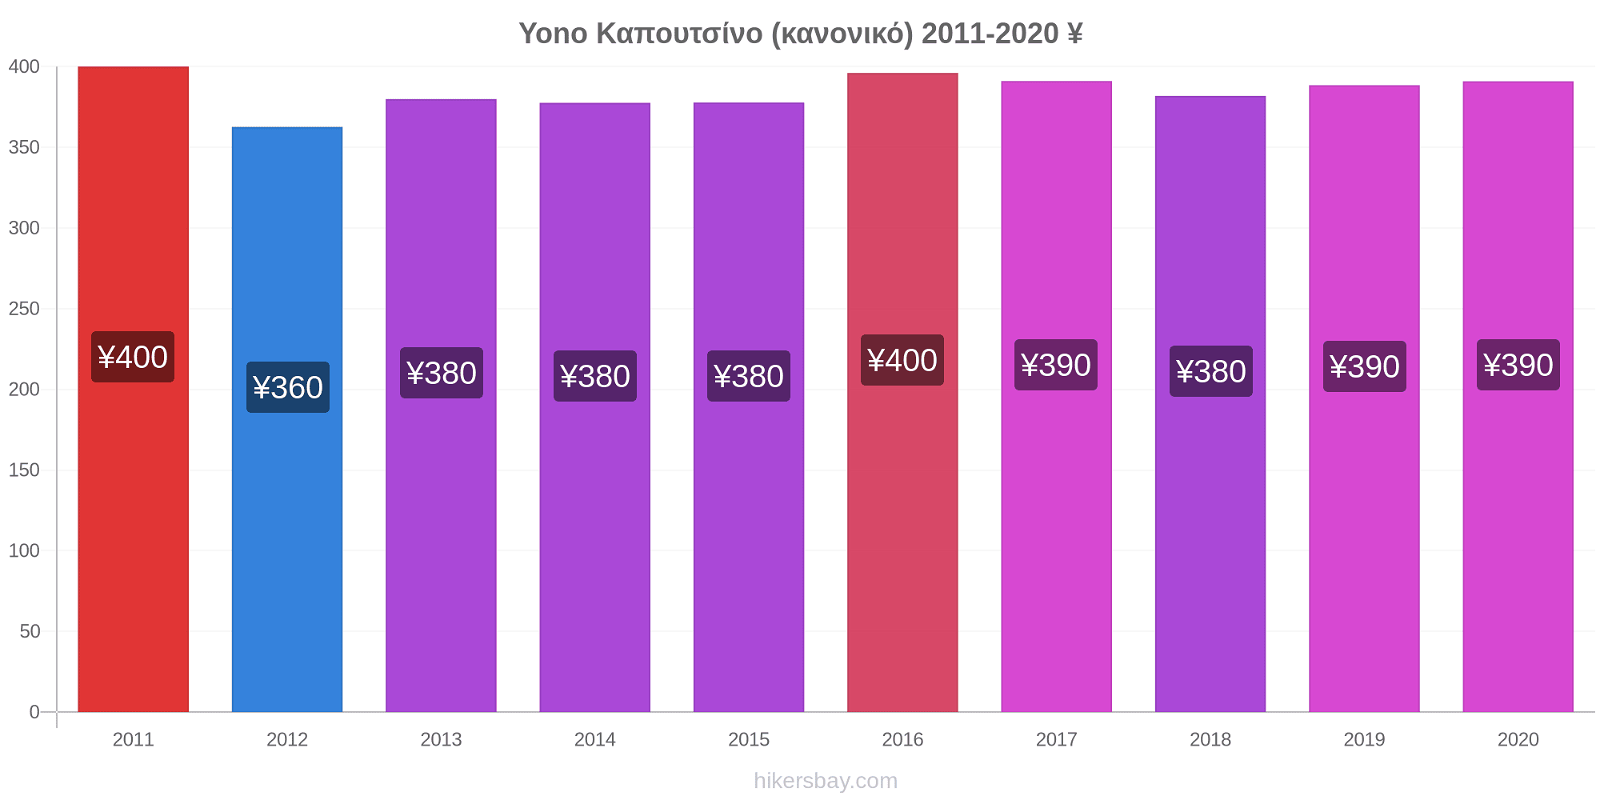 Yono αλλαγές τιμών Καπουτσίνο (κανονικό) hikersbay.com